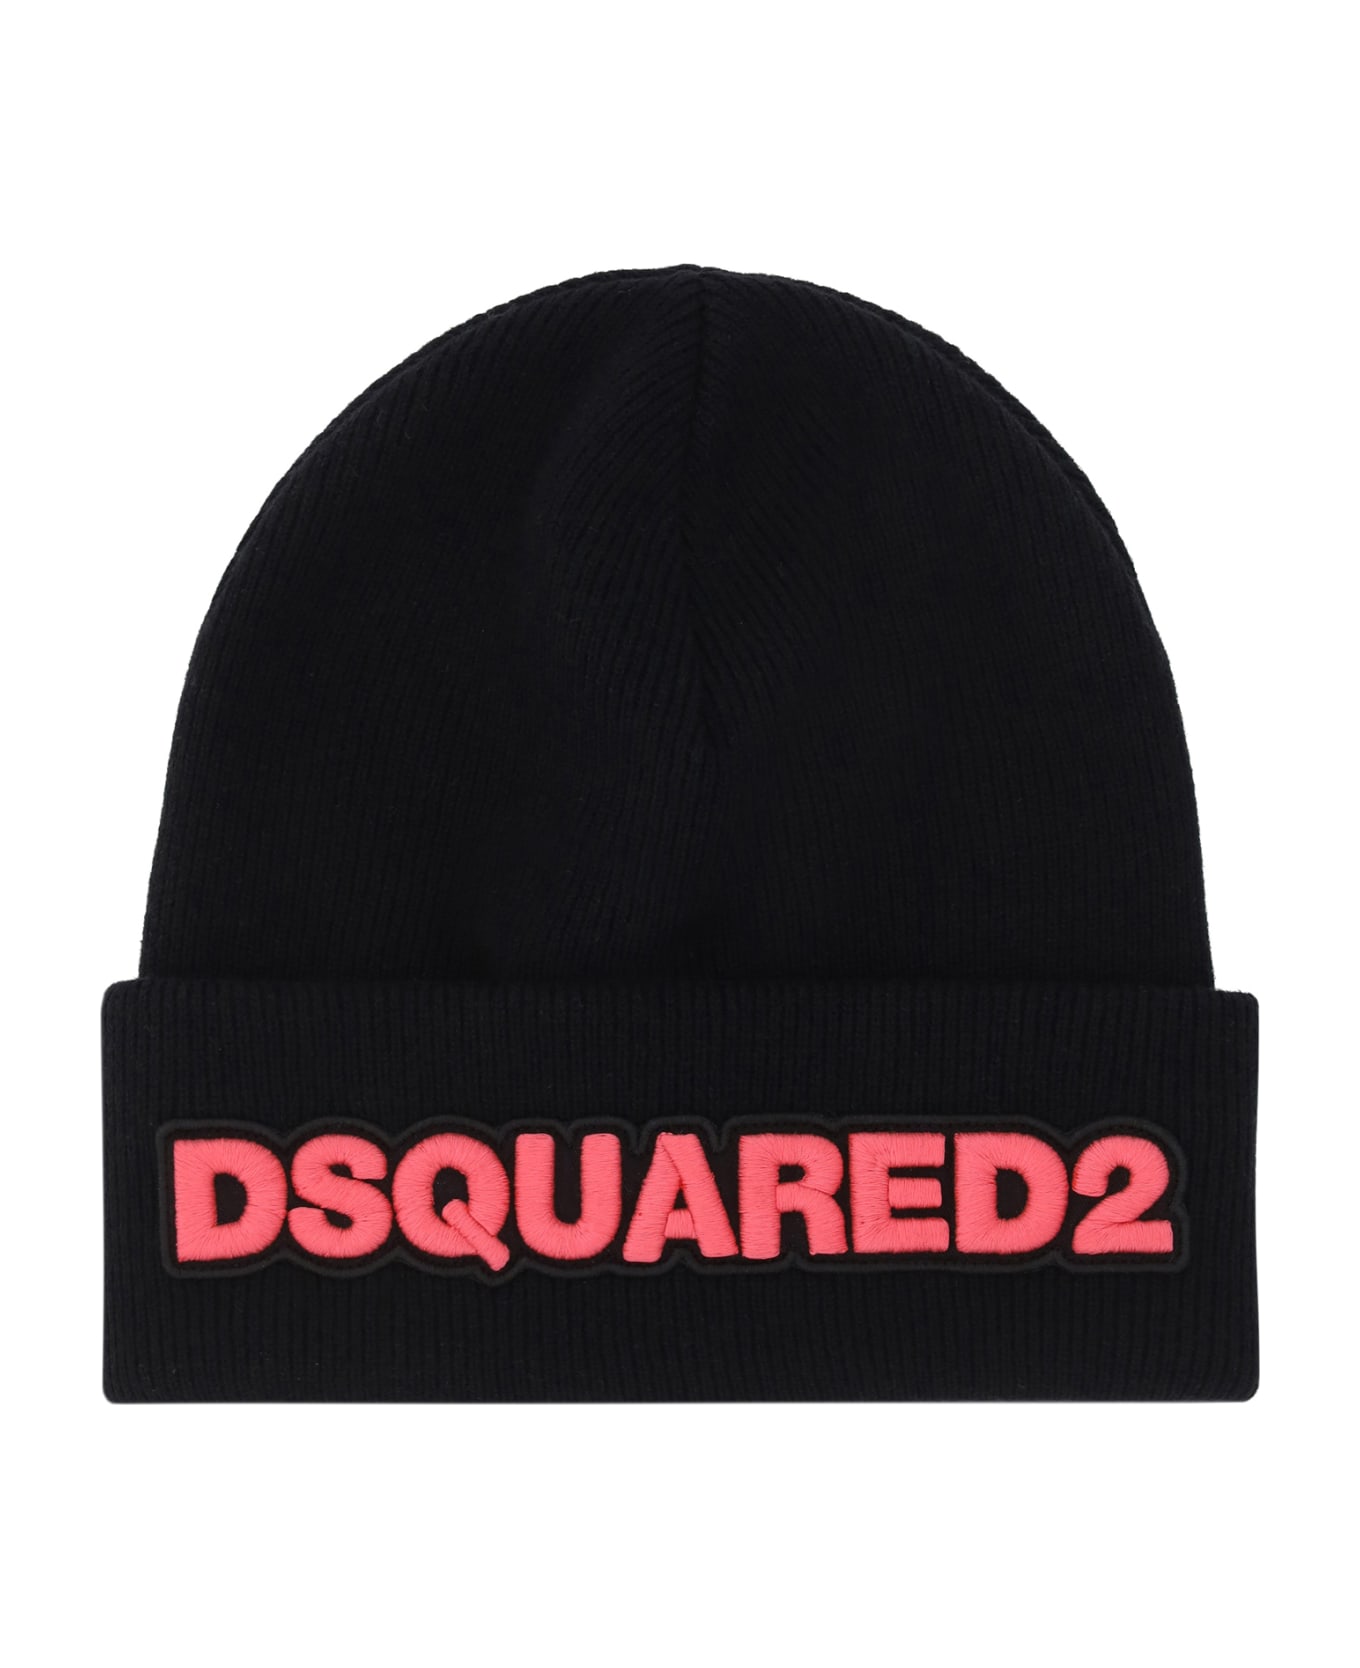 Dsquared2 Hat - M2747